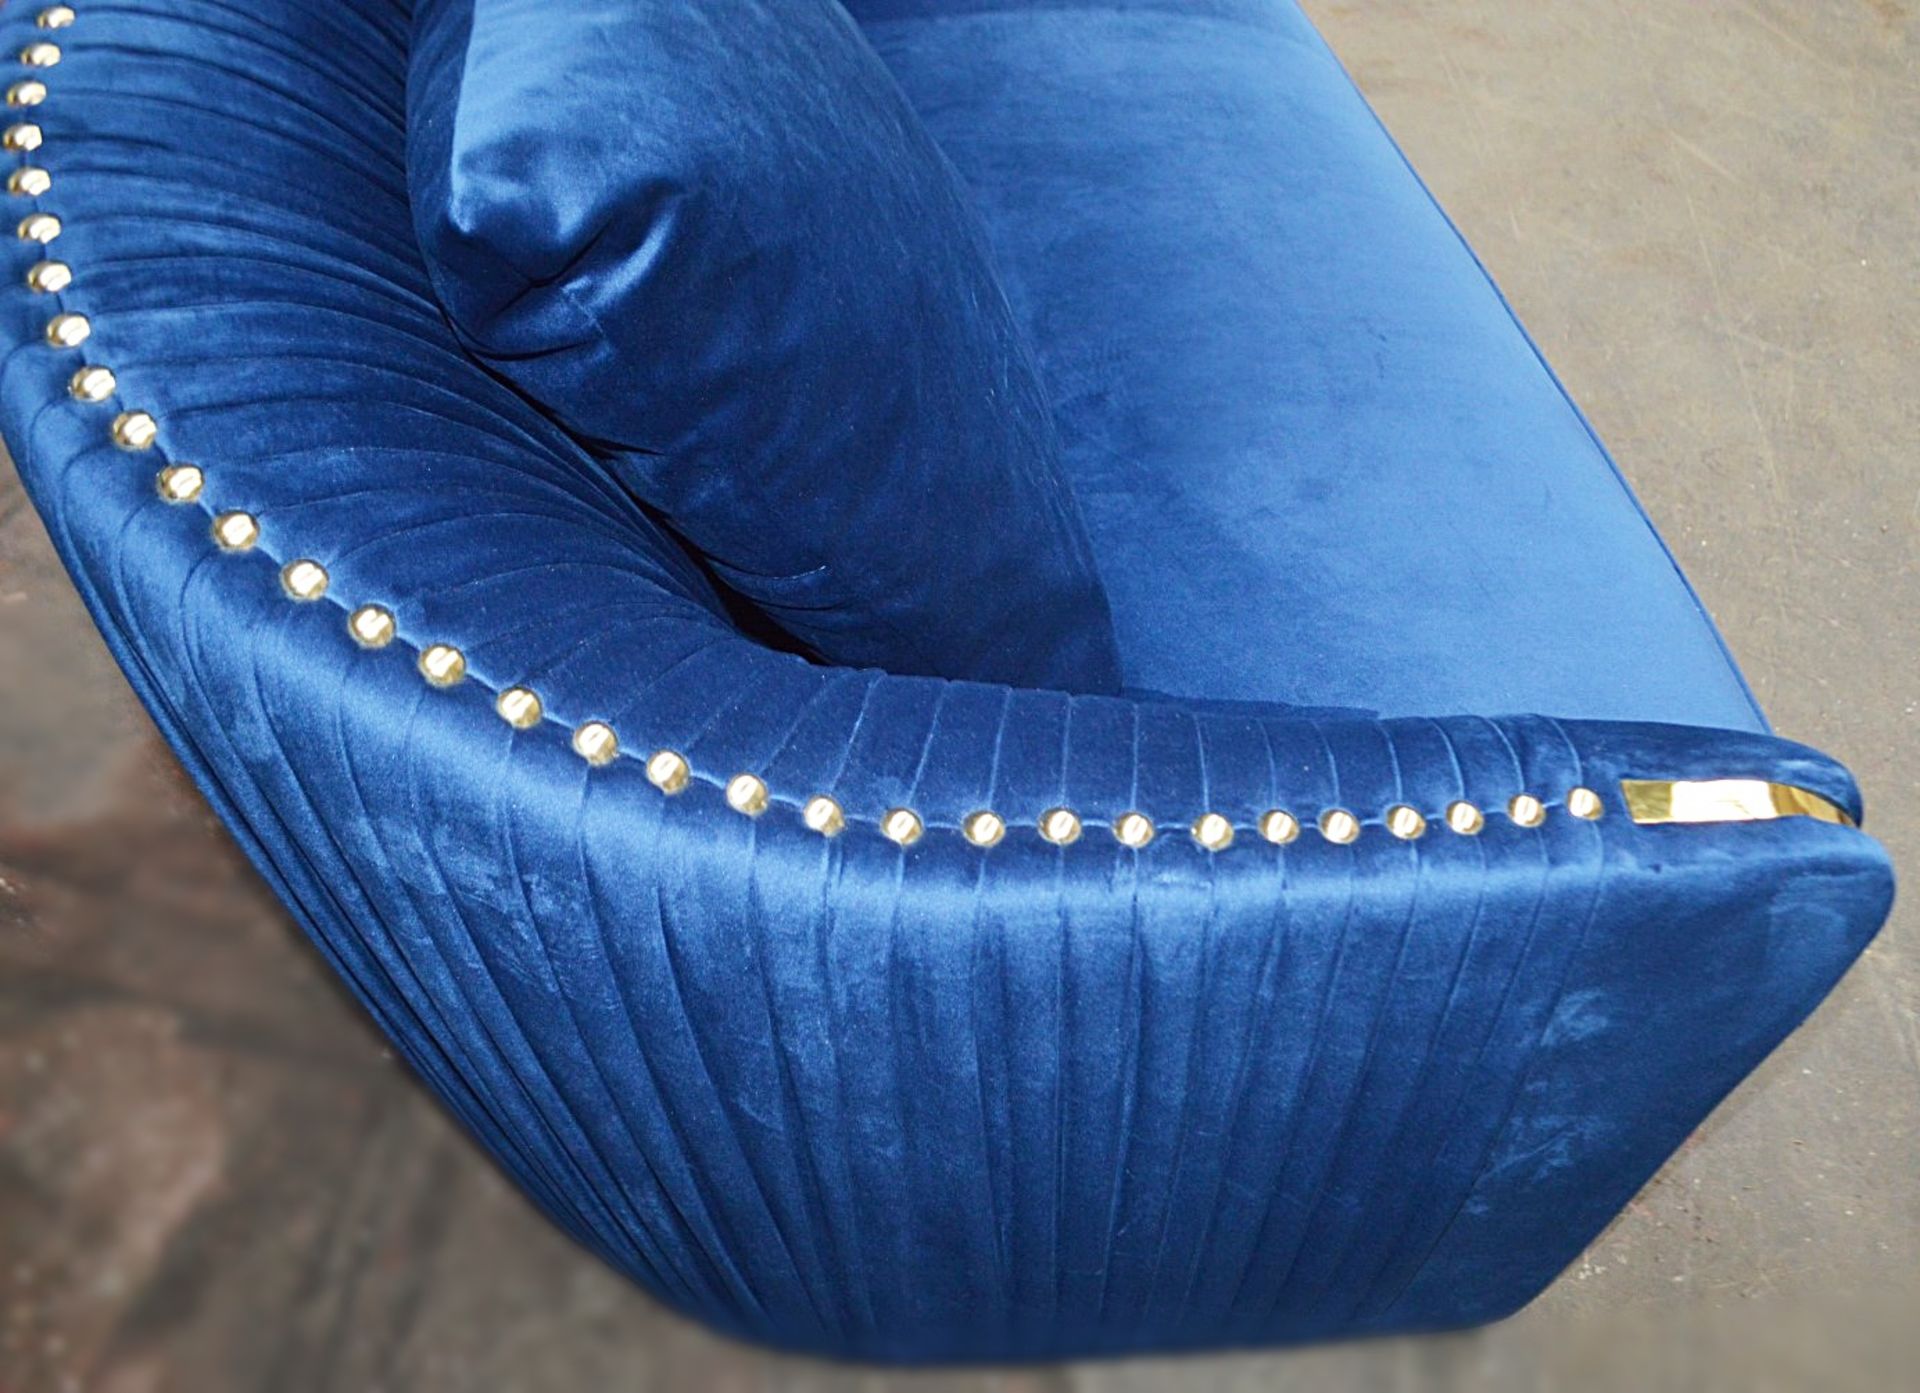 1 x Bespoke Blue Velvet Button-Back Sofa In A Rich Royal Blue Velvet With Detailing In Gold - Image 7 of 8